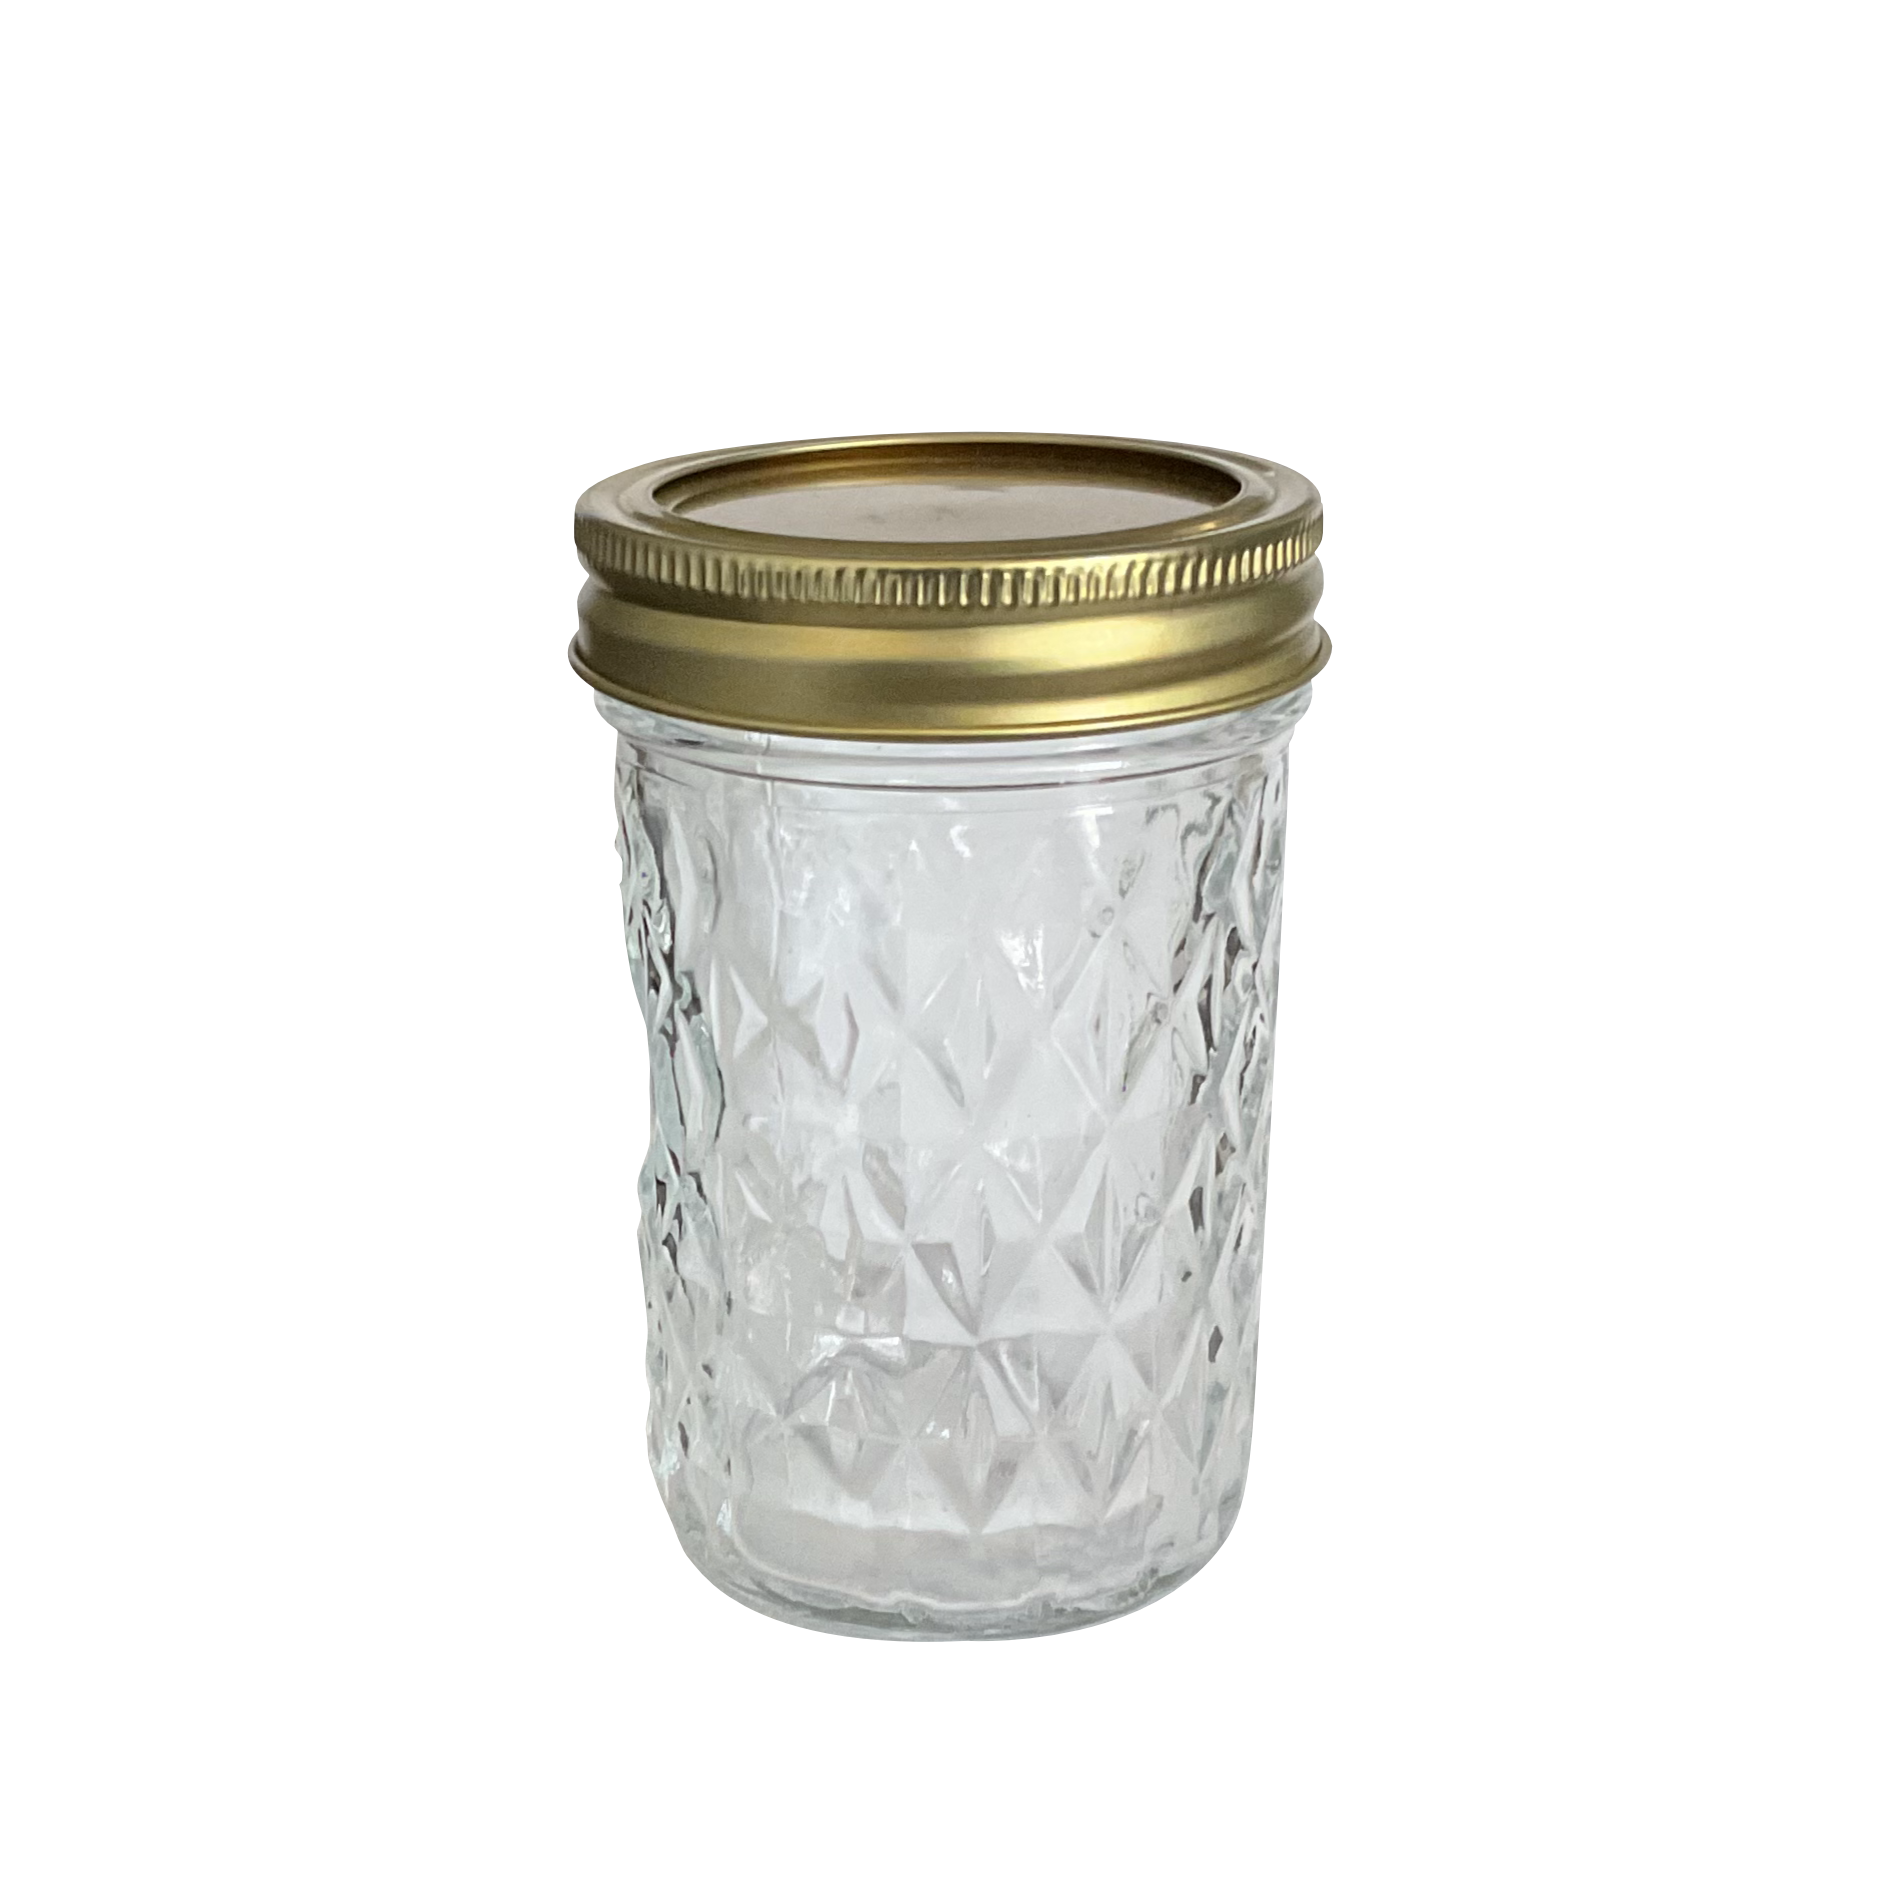 8 oz Glass Mason Jars